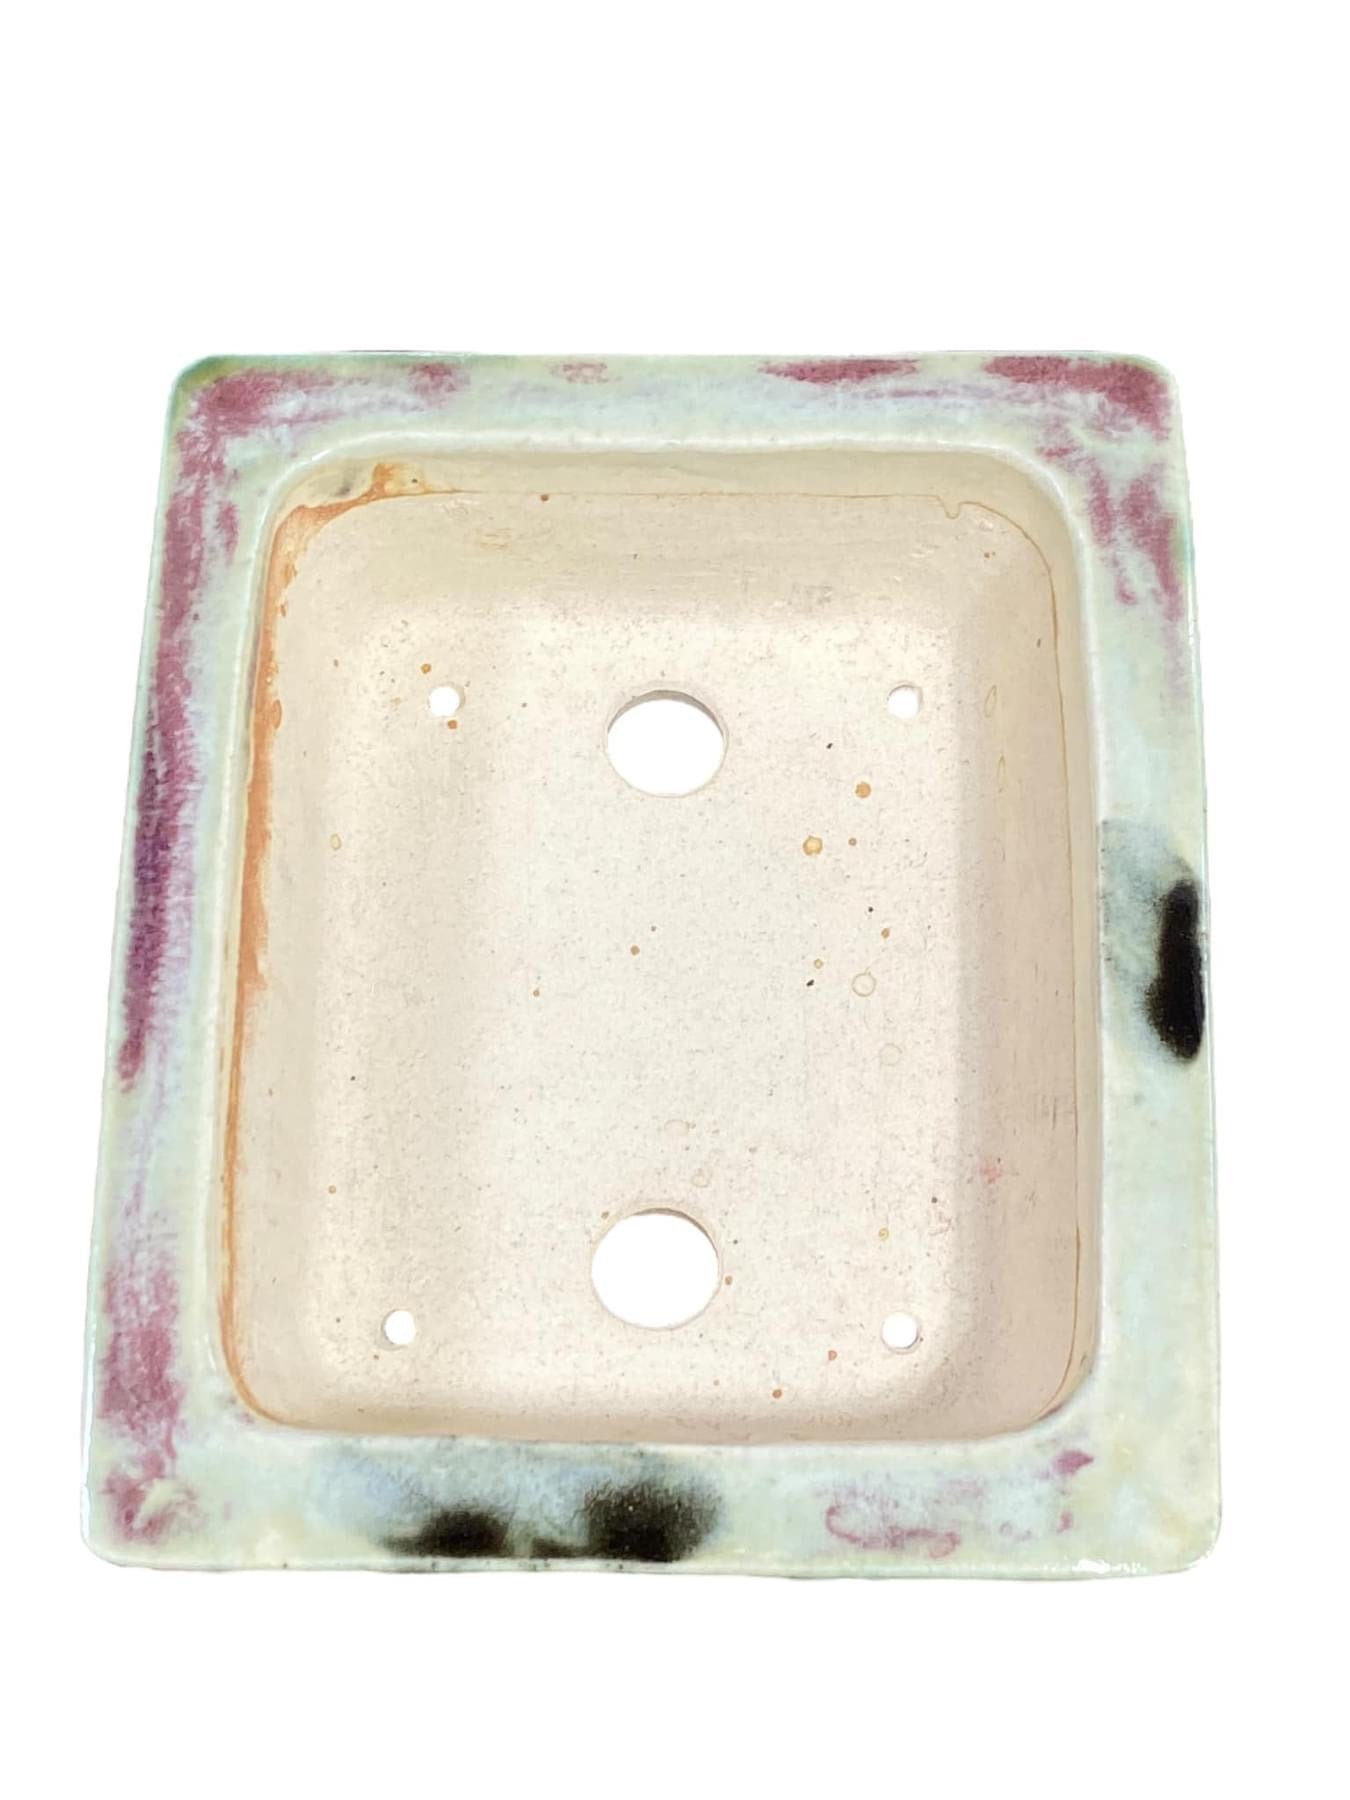 Fukuda Keiun - Stellar Crackle Glazed Rectangle Bonsai Pot (6-5/16” wide)